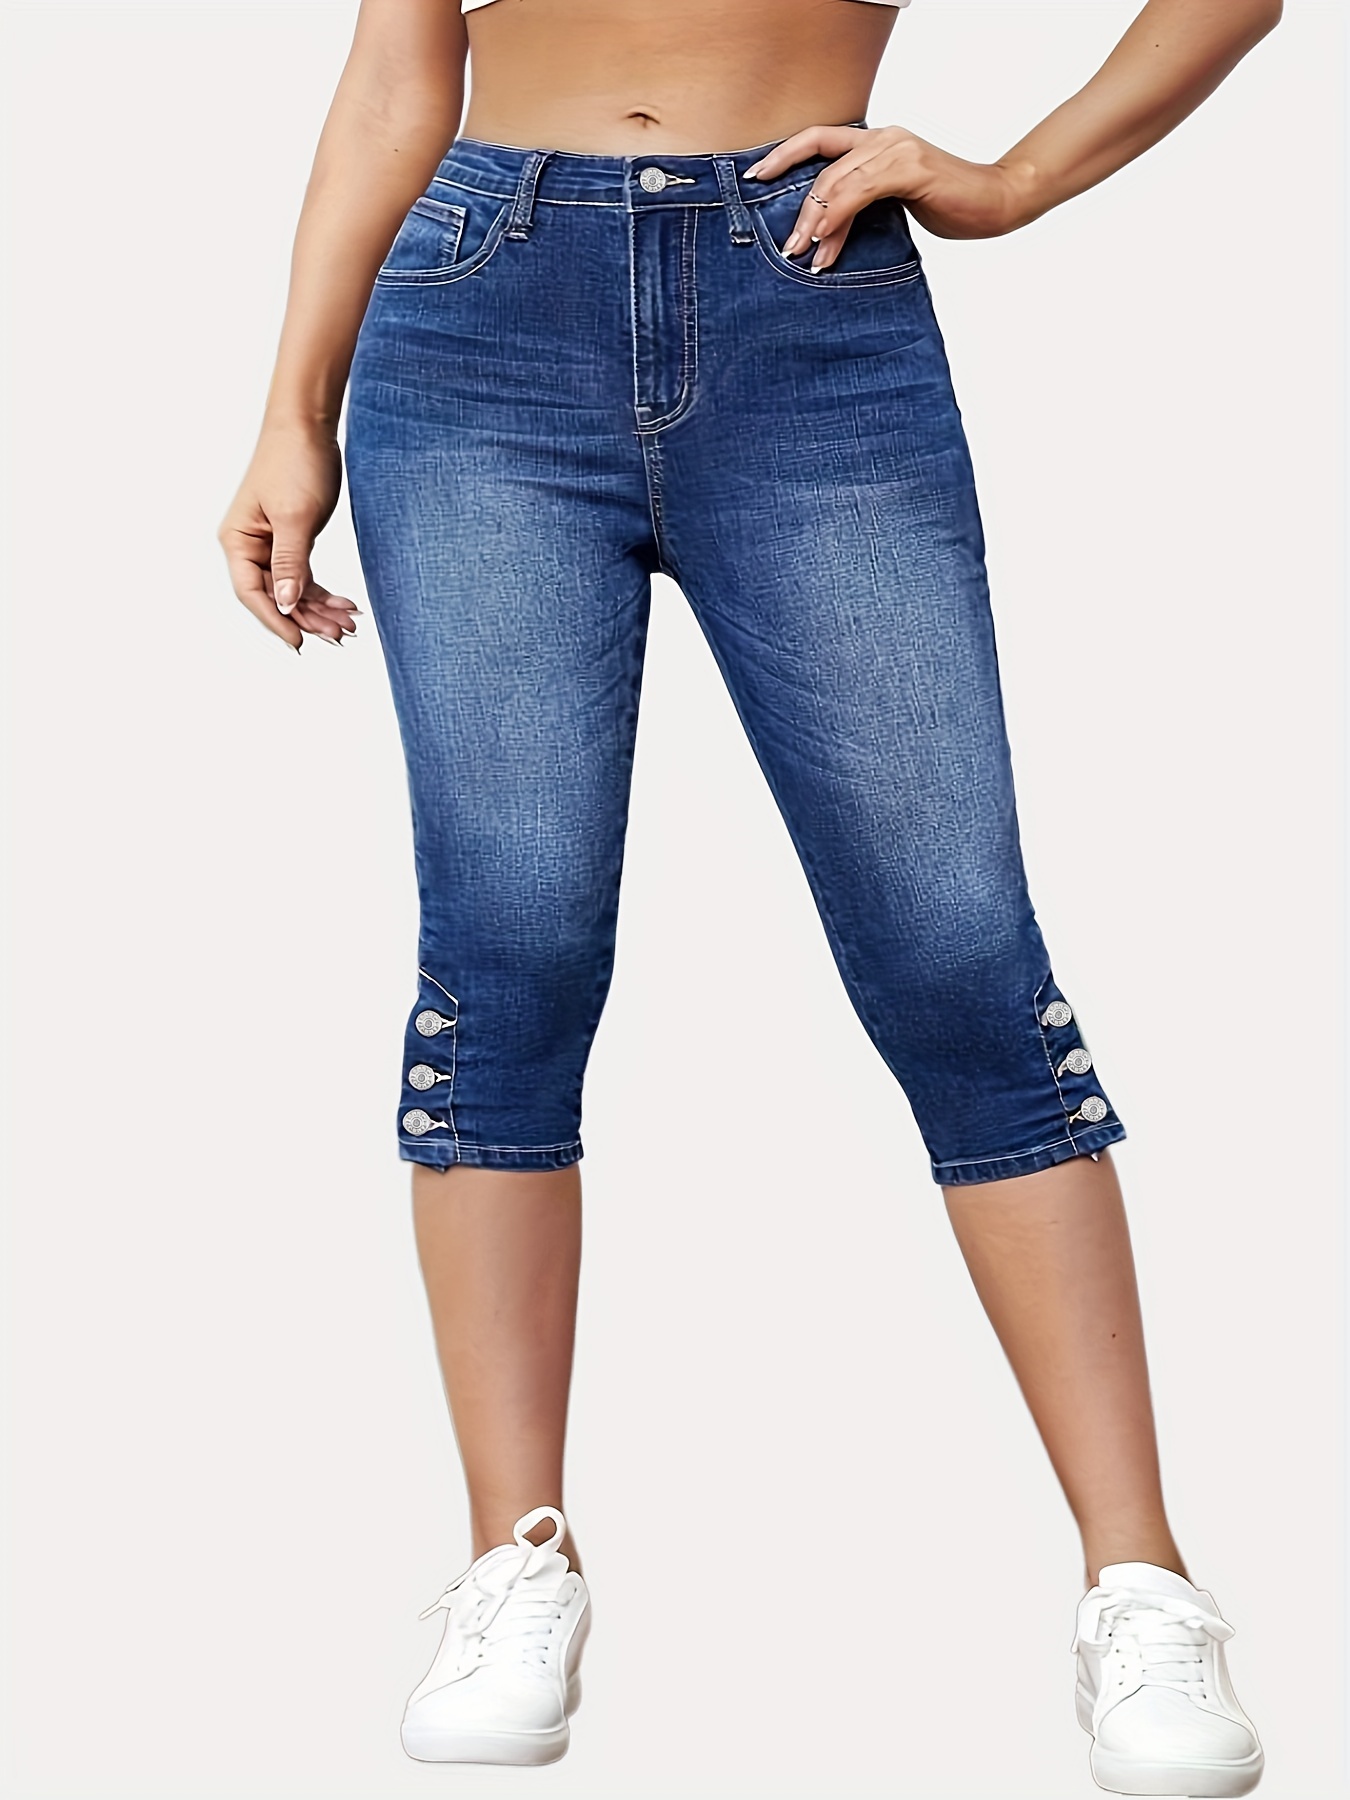 Conshvi Women's High Waisted Capris Jeans Trendy Skinny Stretch Capri Jeans  Elastic Waist Drawstring Denim Capris Pants, Blue, Small at  Women's  Jeans store